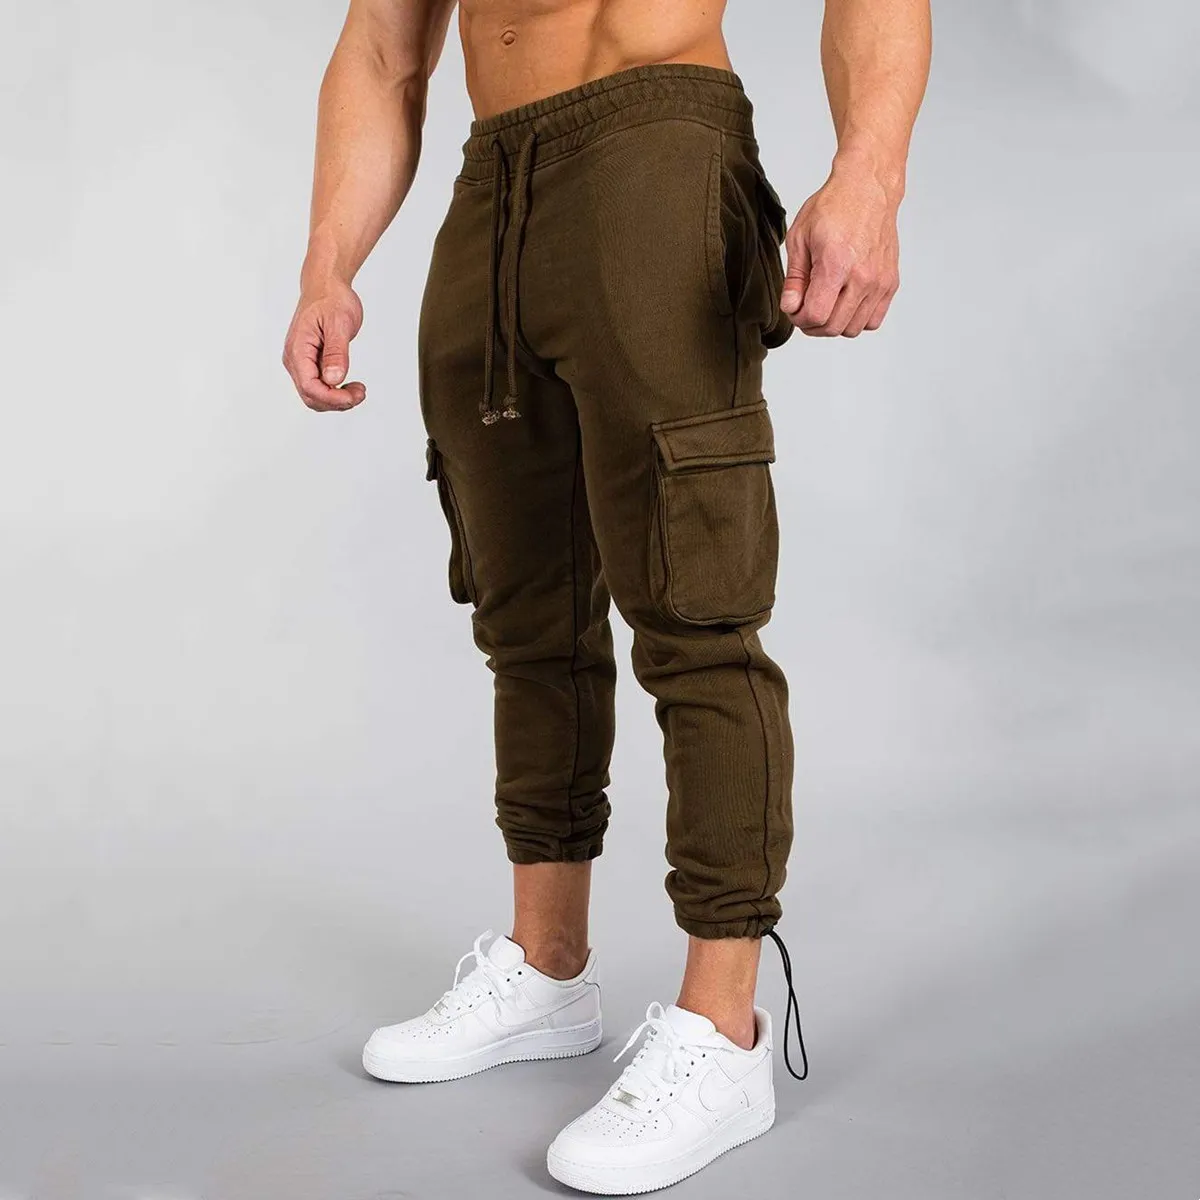 Joggers Sweatpants Men Autumn Casual Pants Gym Fitness Cotton Sportswear Trousers Male Multi-pocket Cargo Training Trackpants